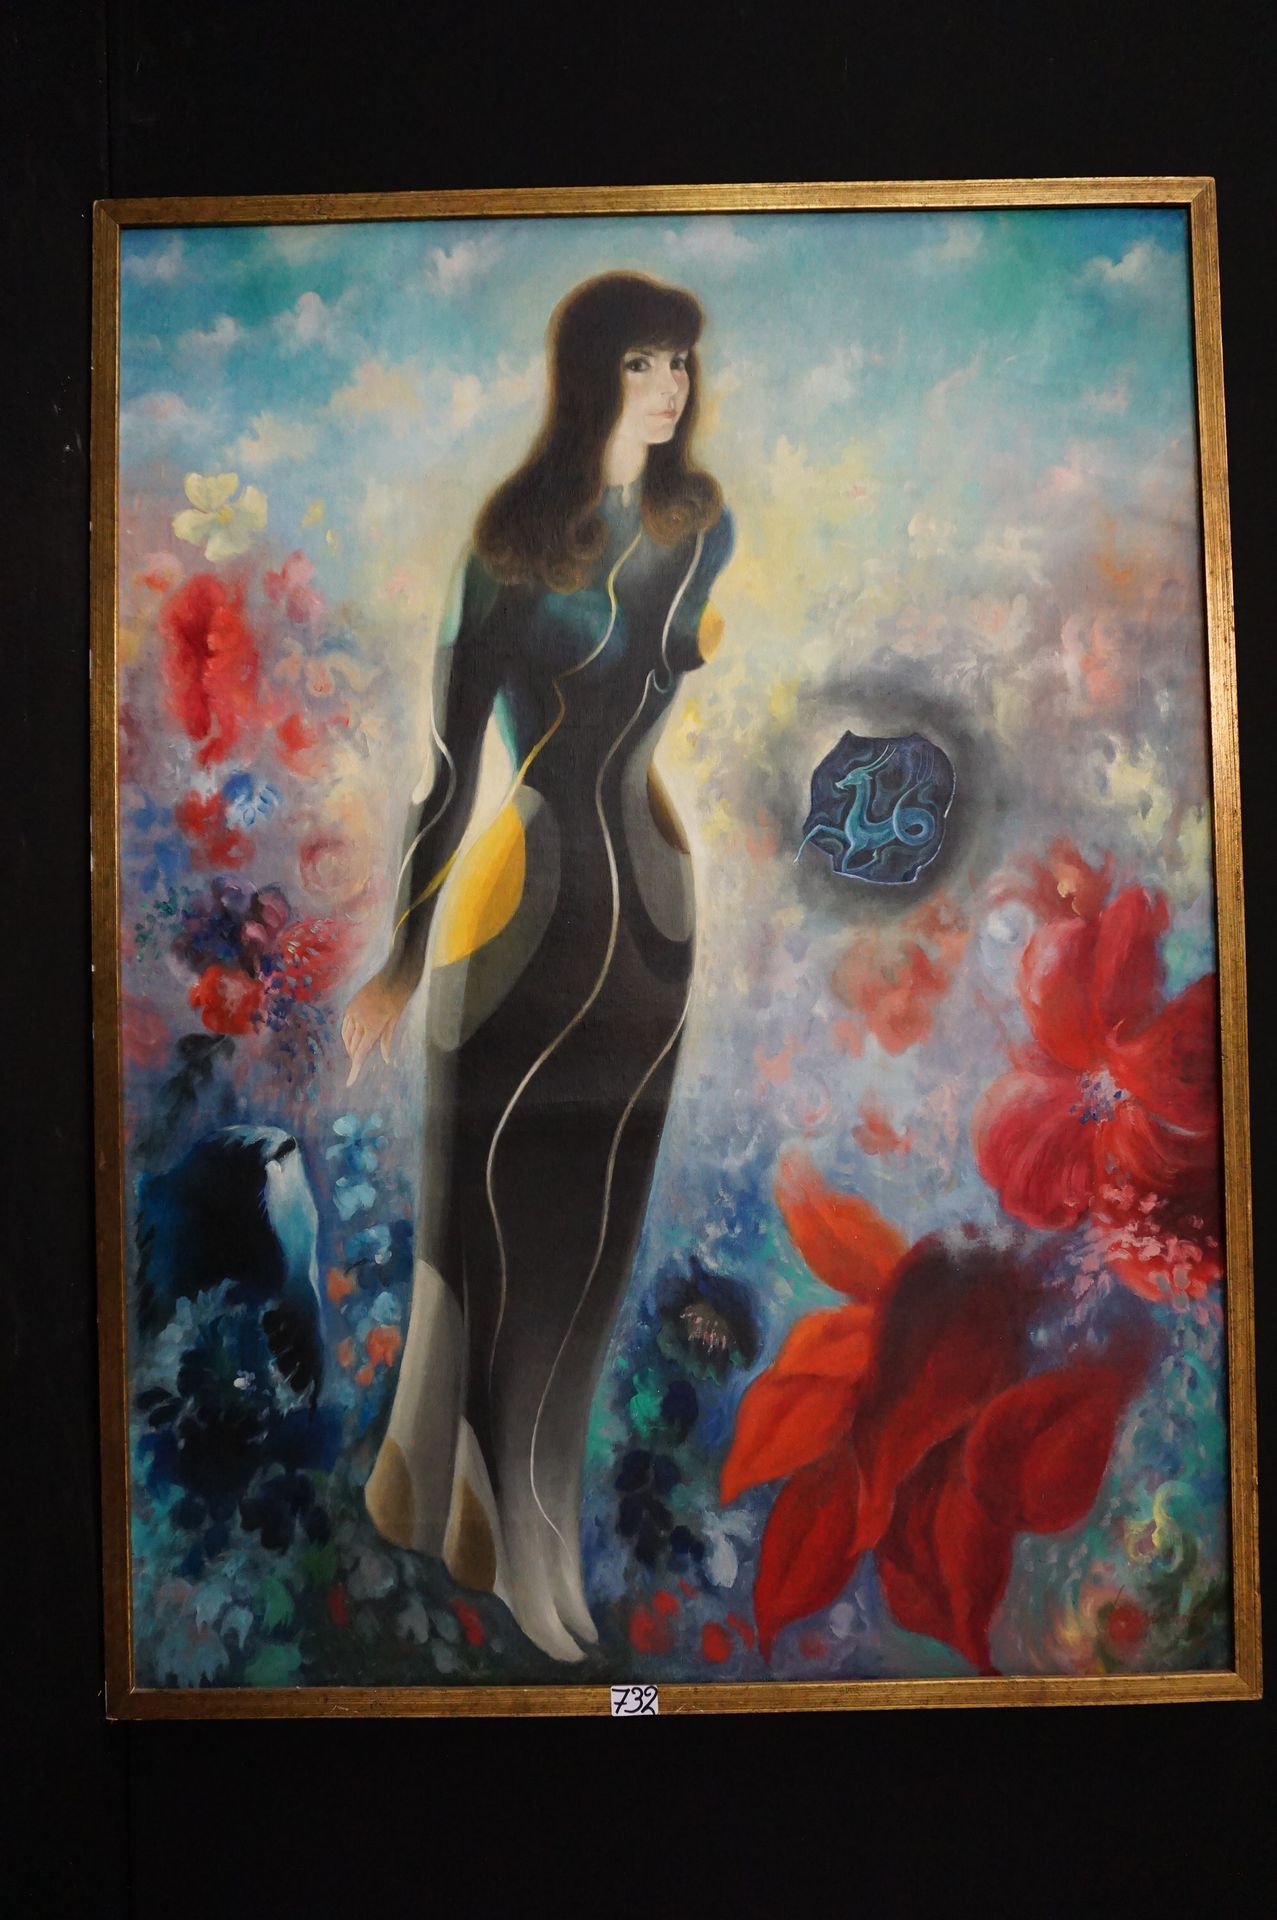 FRANCINEY "Mujer joven" - Óleo sobre lienzo - Firmado - 130 x 97 cm